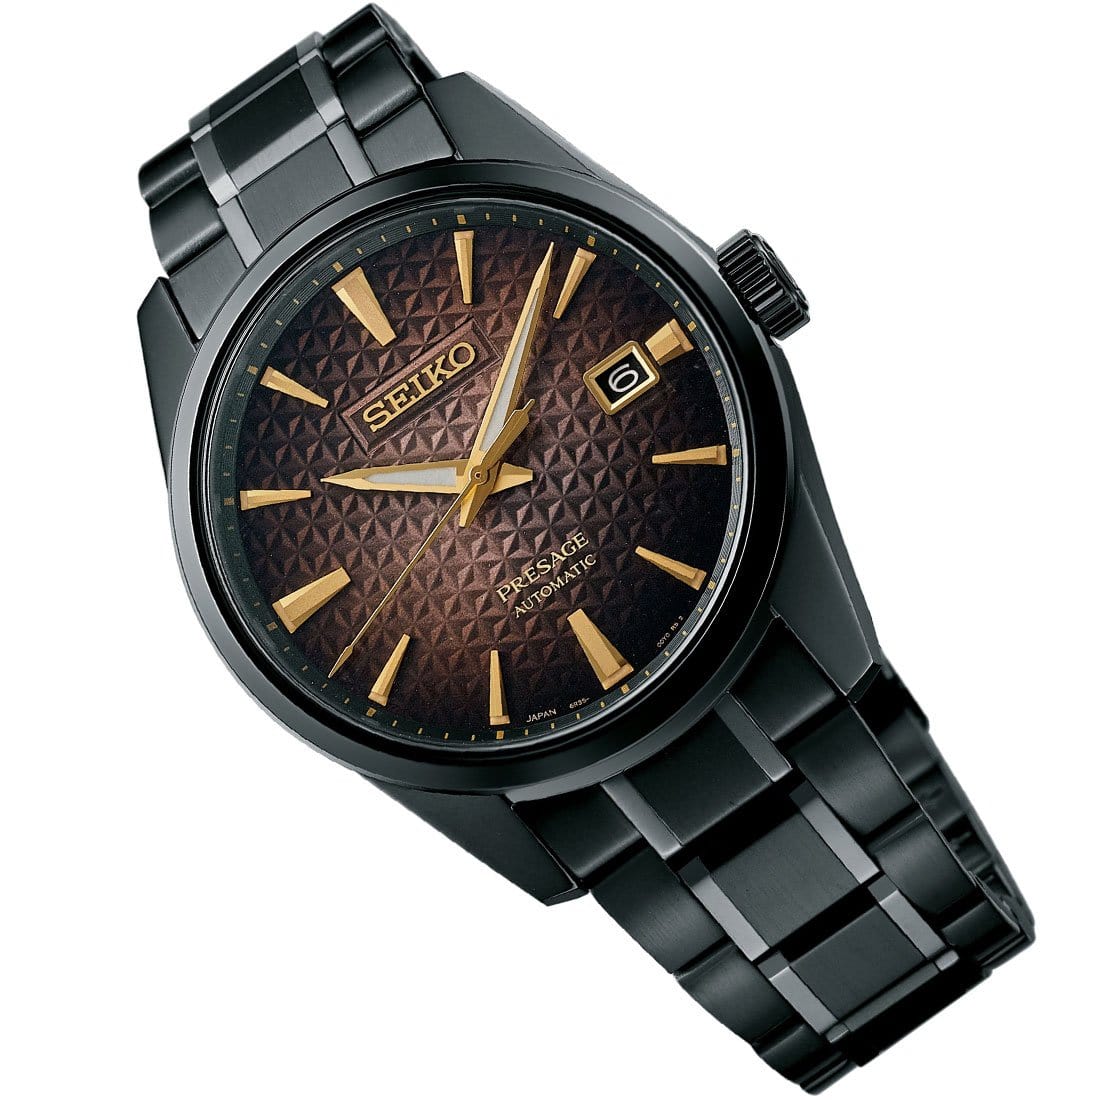 SPB205 Seiko Presage Sharp Edged 24 Jewels Automatic Limited Edition Watch